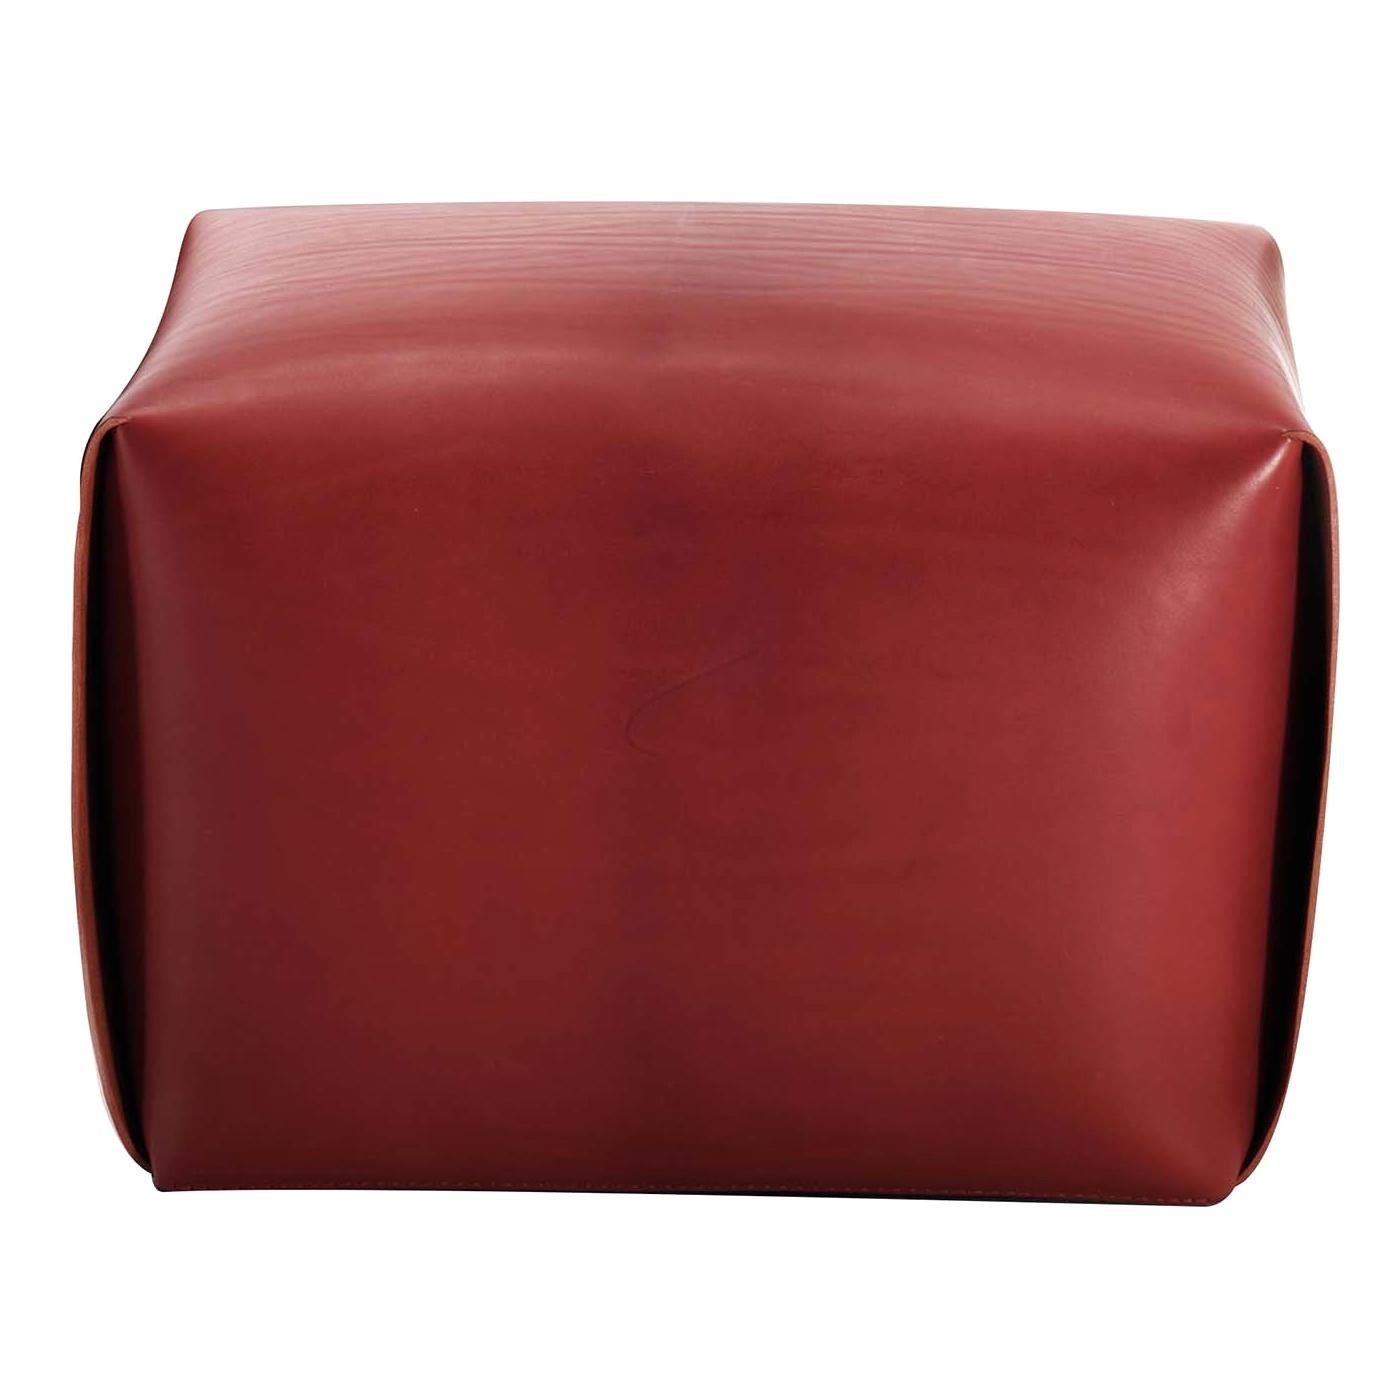 Big Bao Red Leather Ottoman by Viola Tonucci For Sale